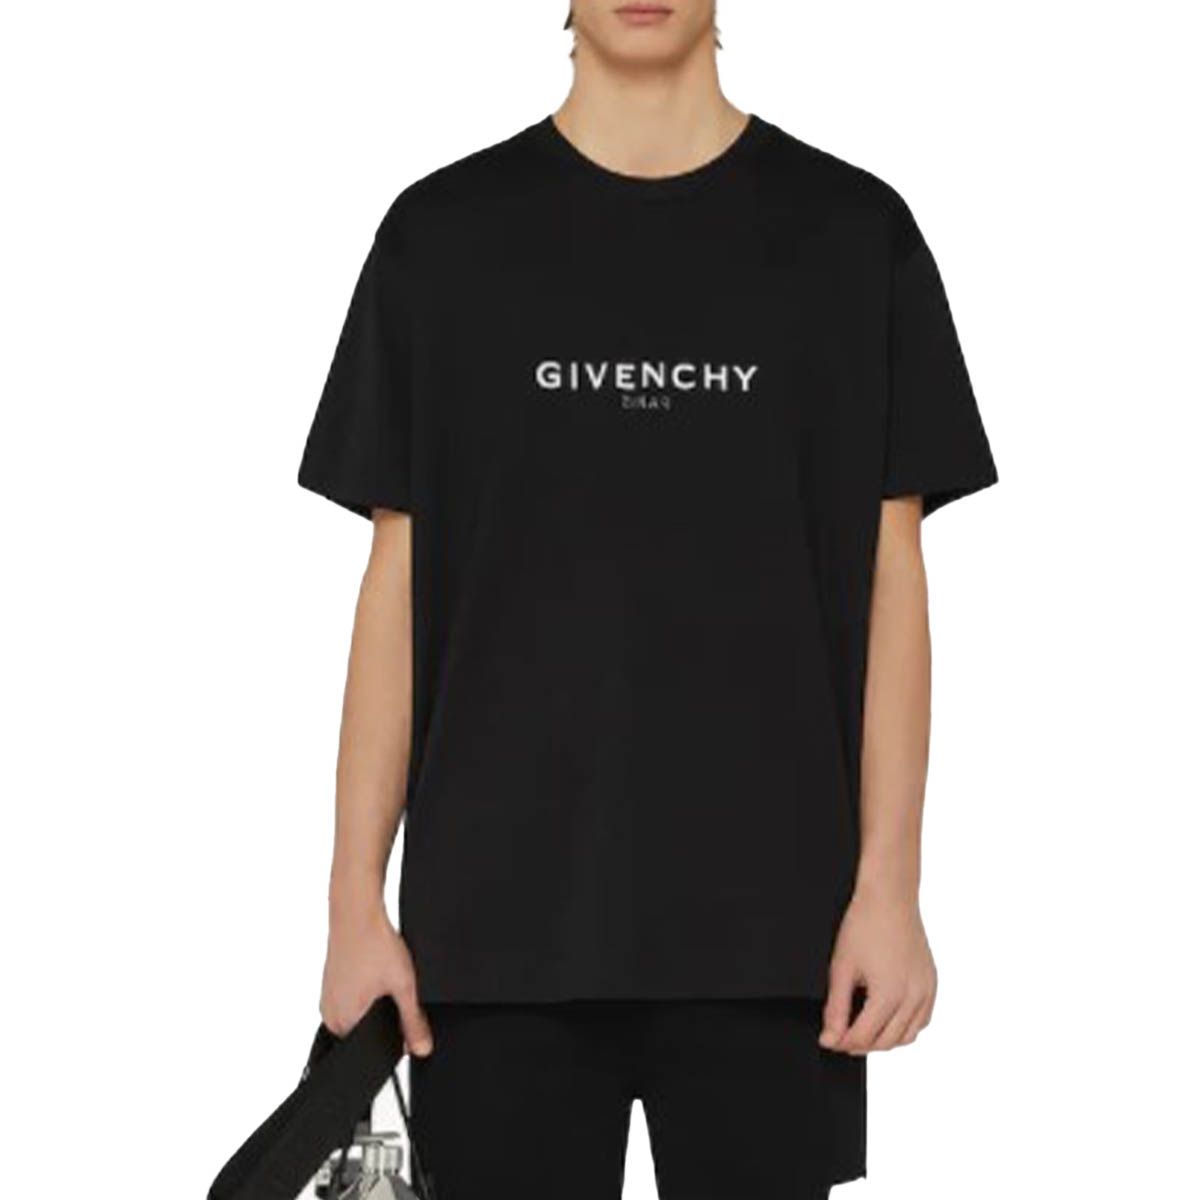 Reverse Oversized Black T-Shirt